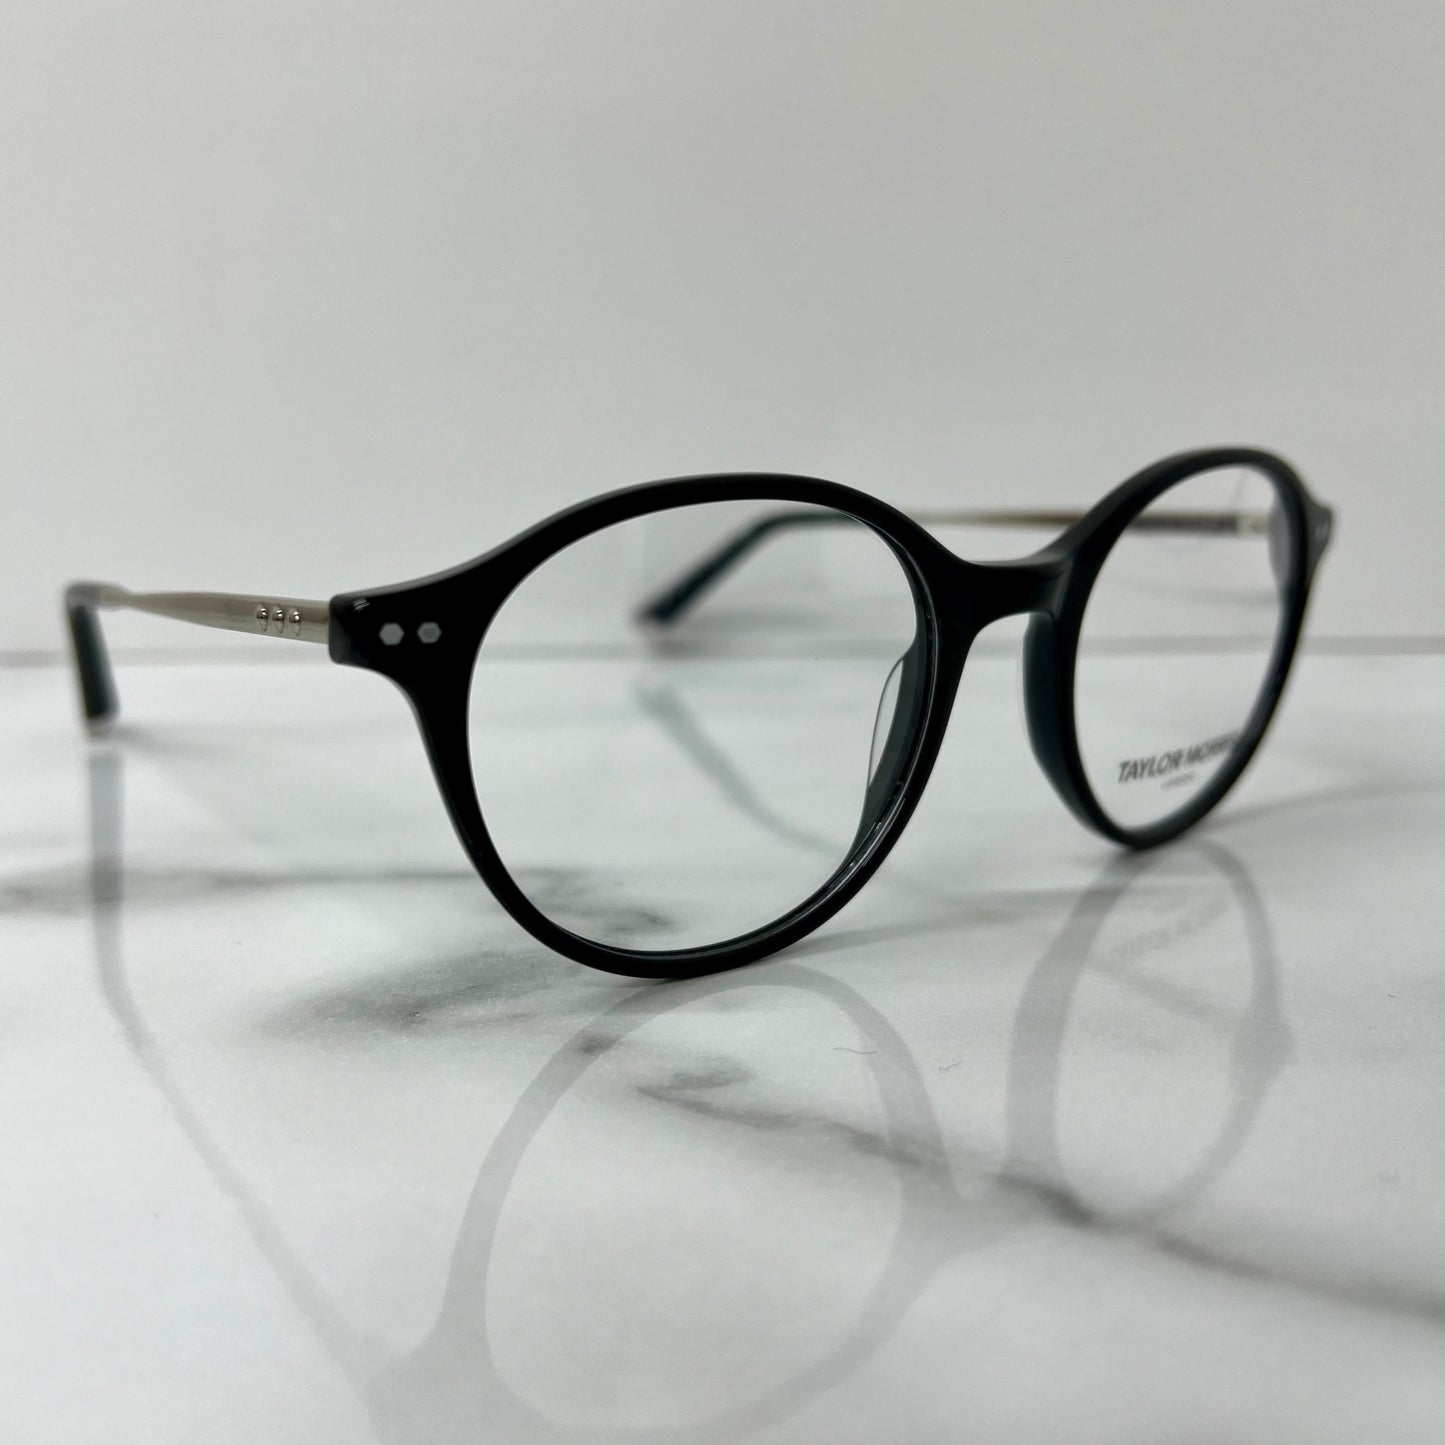 taylor morris prescription glasses frames rx eyeglasses